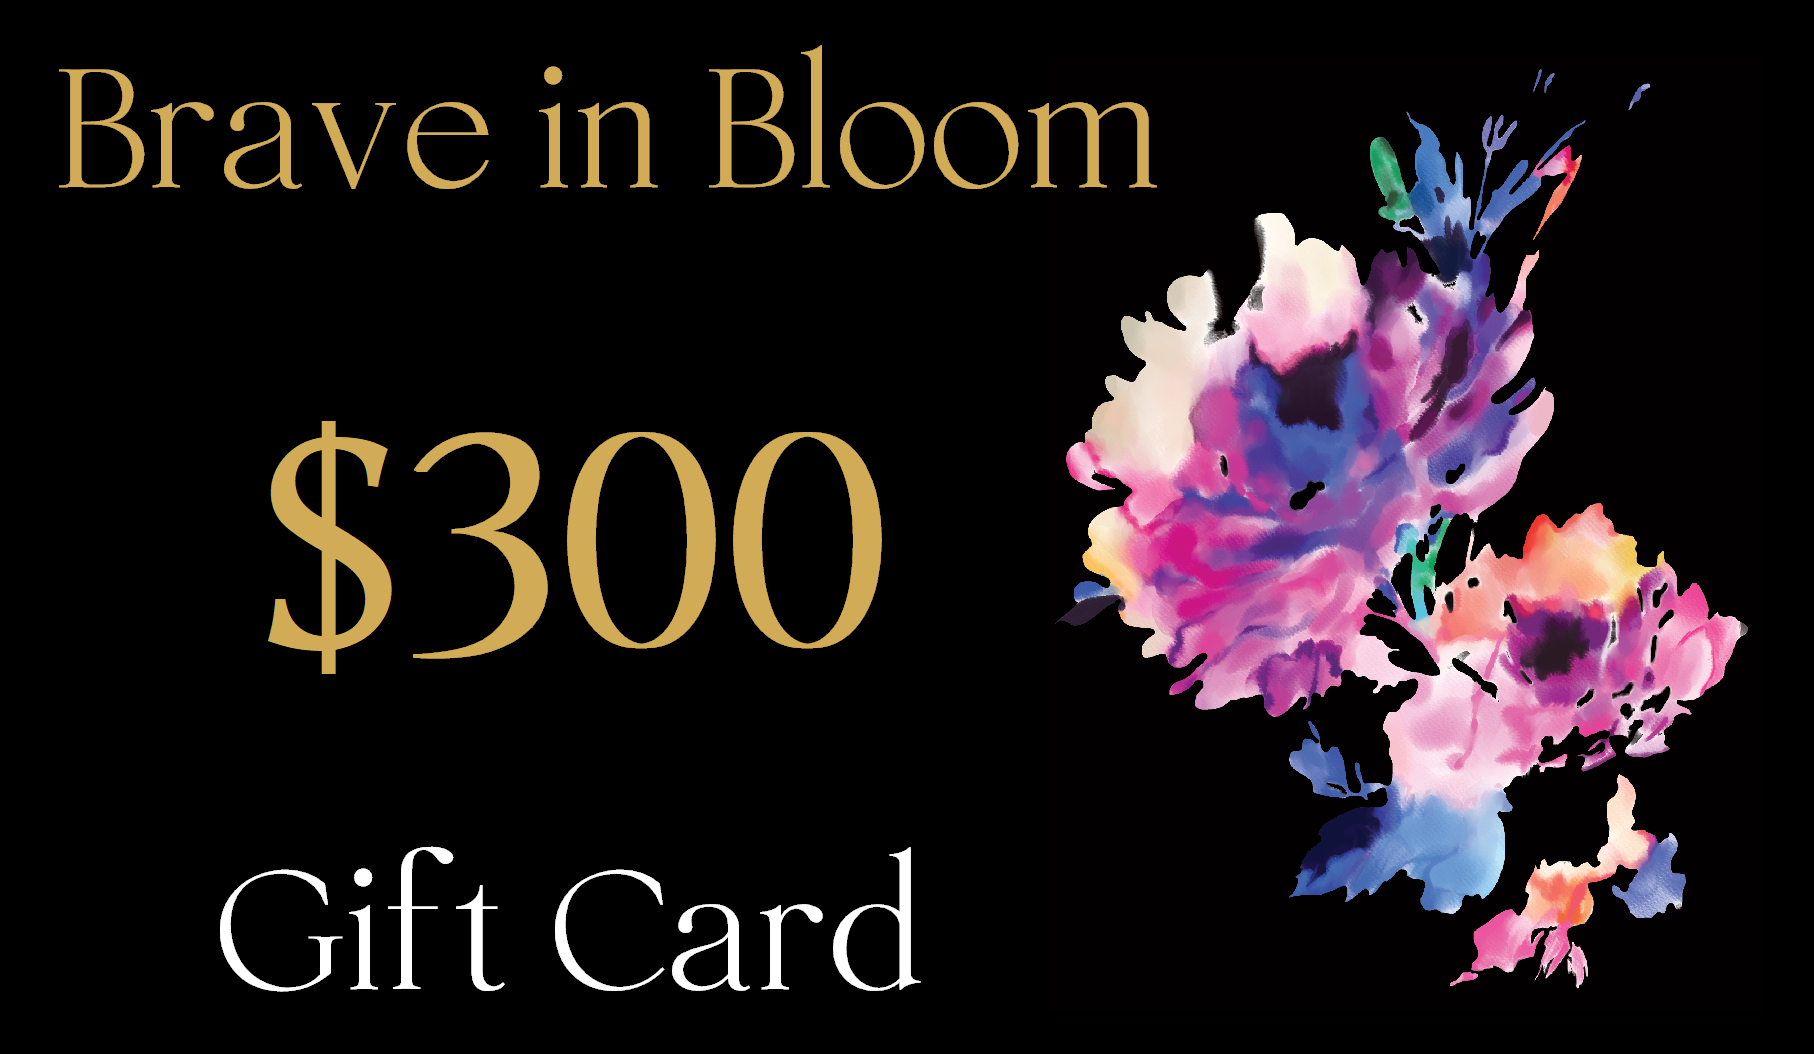 Brave in Bloom Gift Card